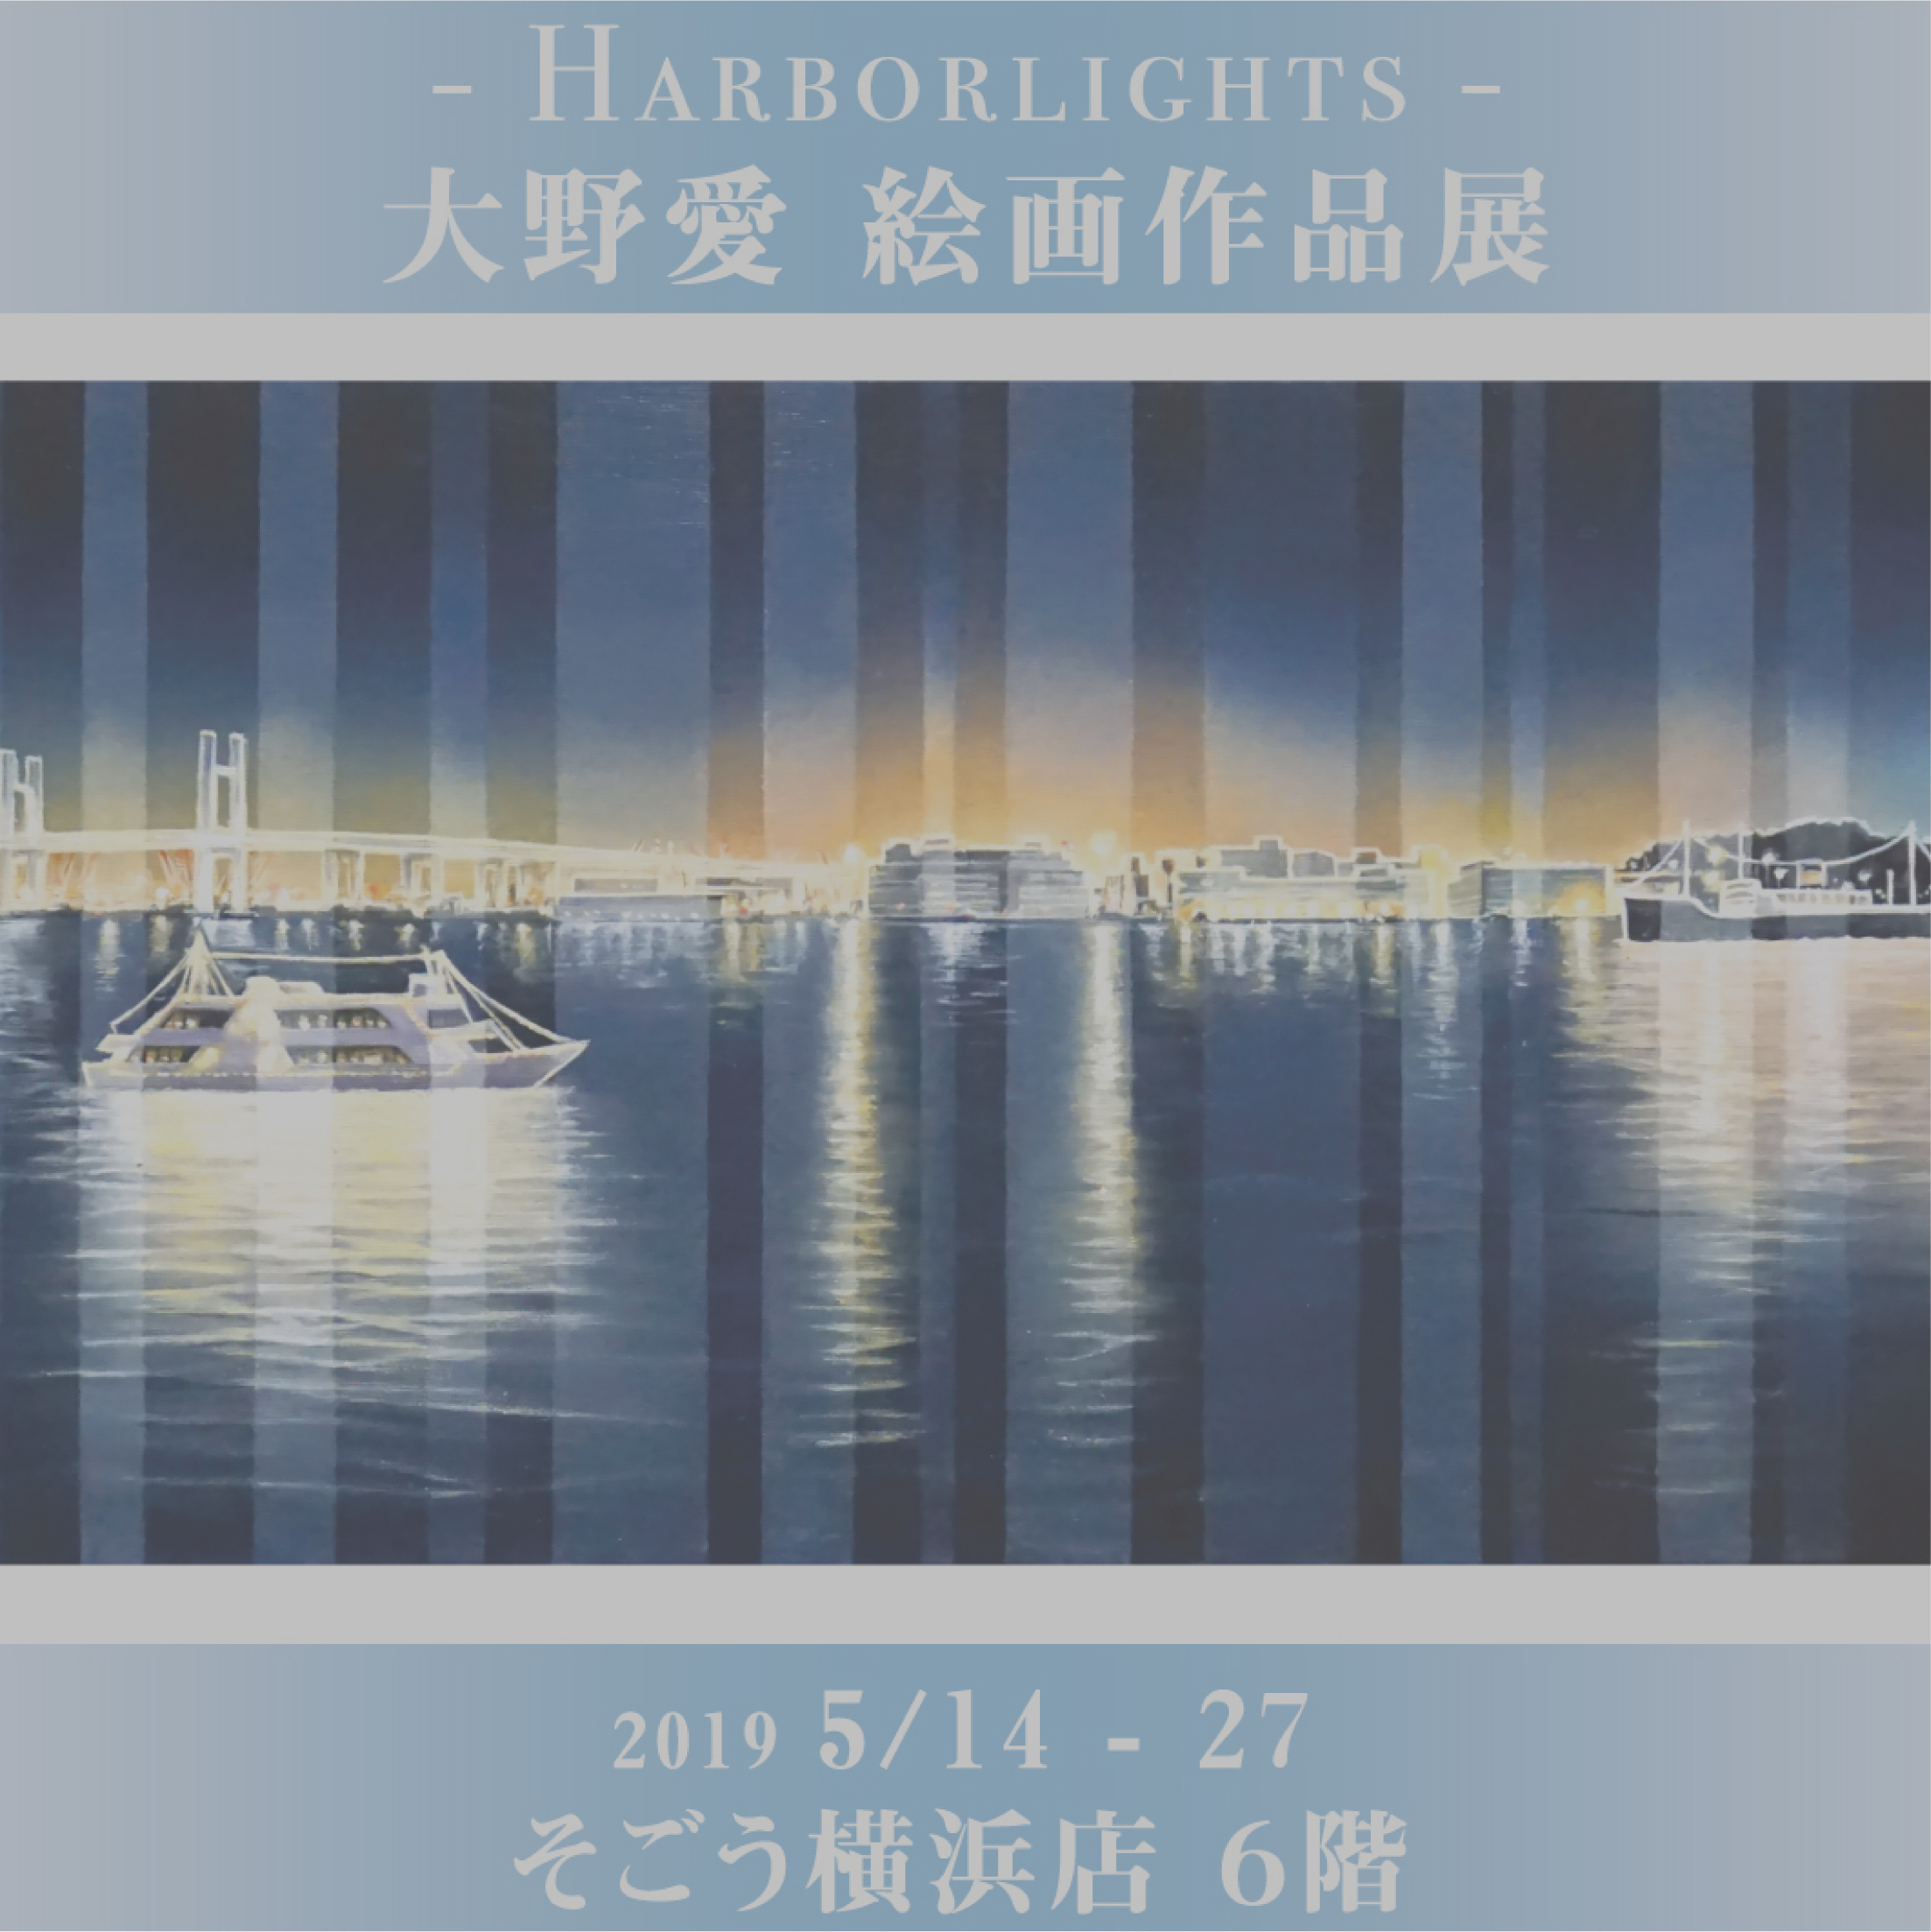 Harborlights